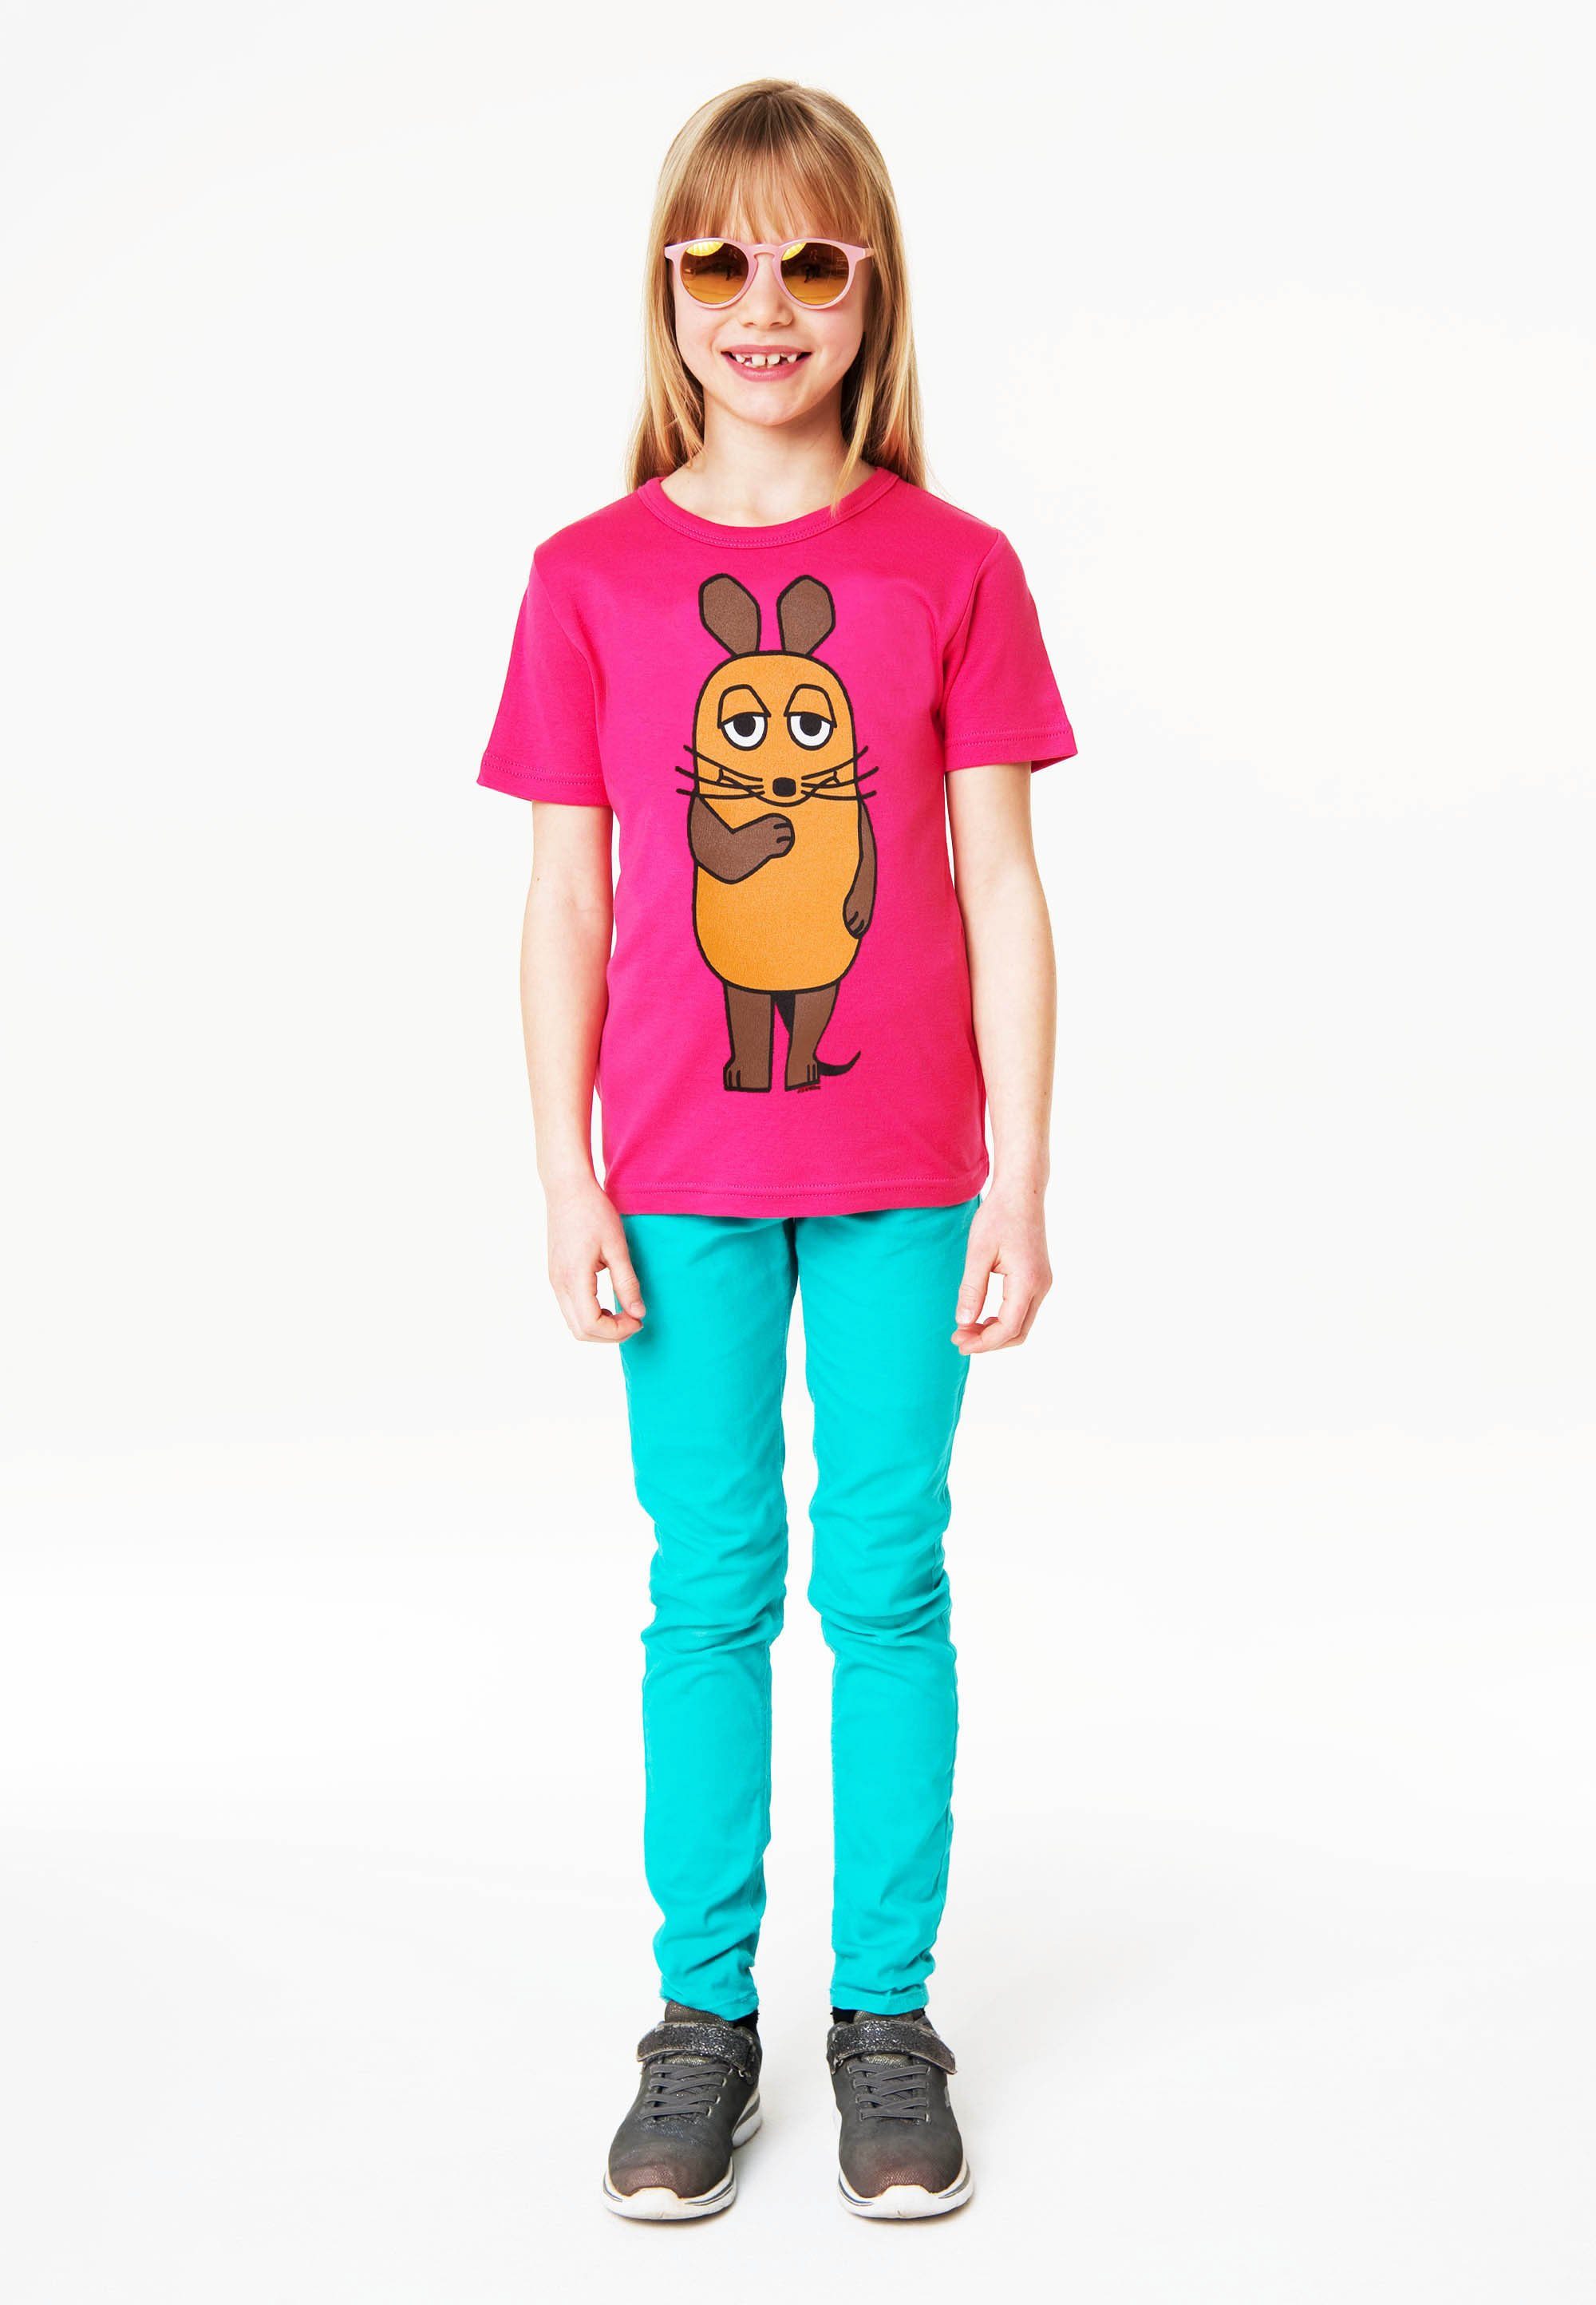 LOGOSHIRT Maus lizenziertem mit Originaldesign Die T-Shirt rosa